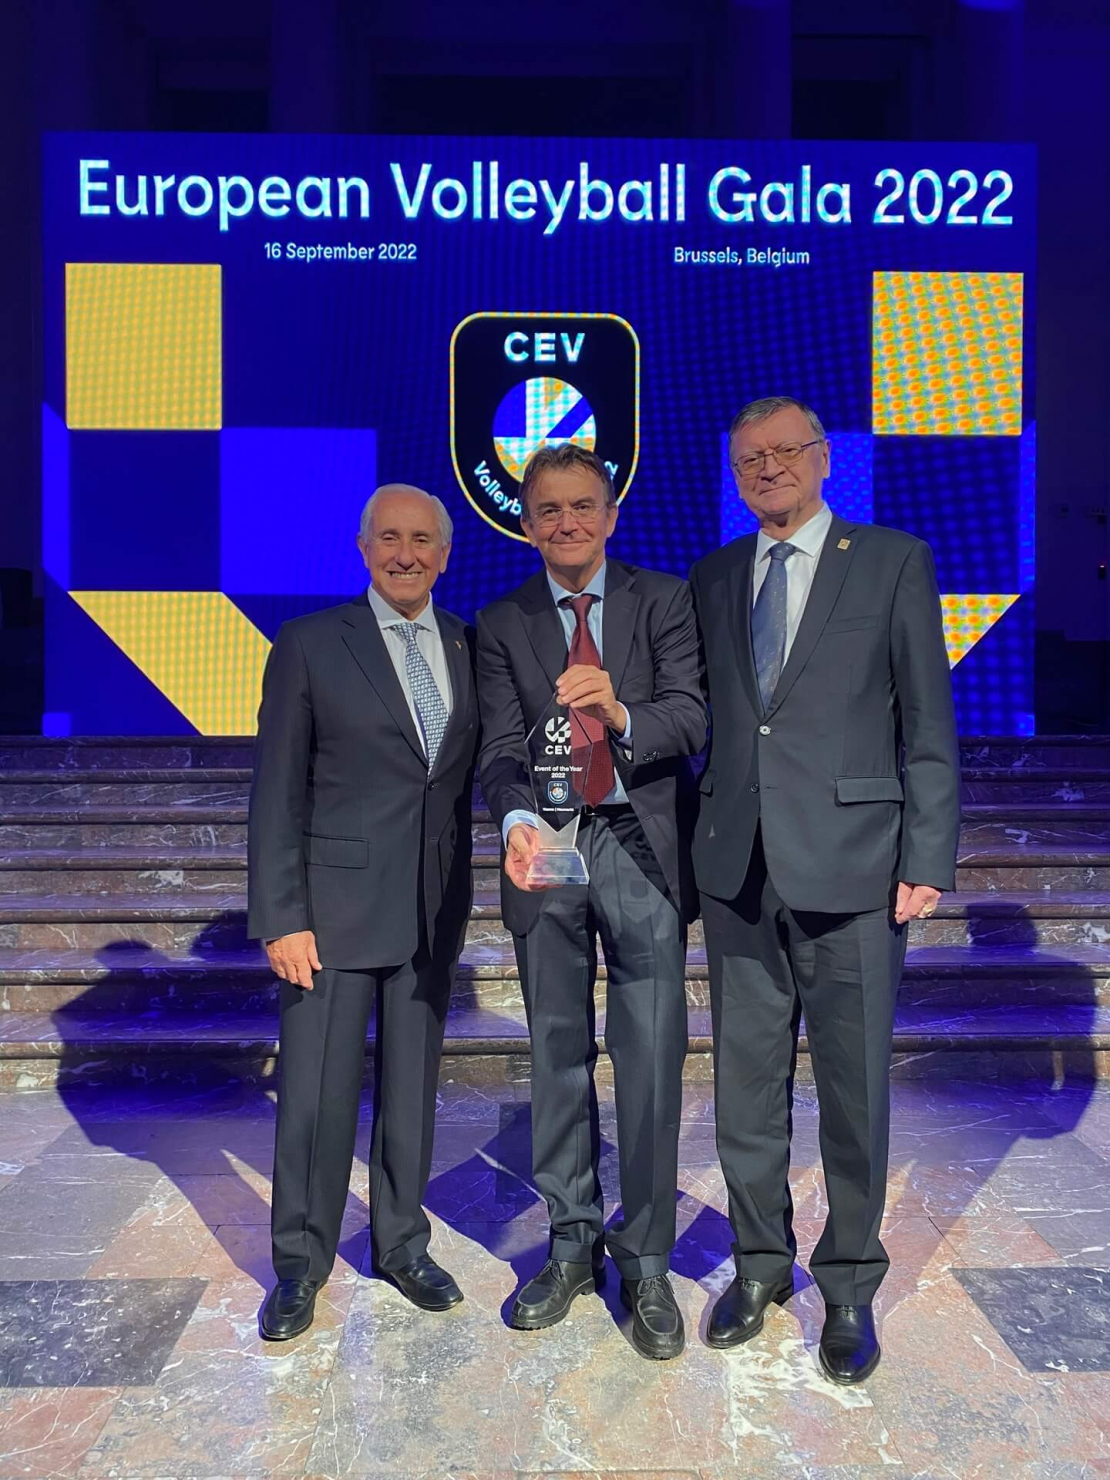 Hannes Jagerhofer received congratulations from Presidents Ary Graça (FIVB, left) and Aleksandar Boričić (CEV) in Brussels.